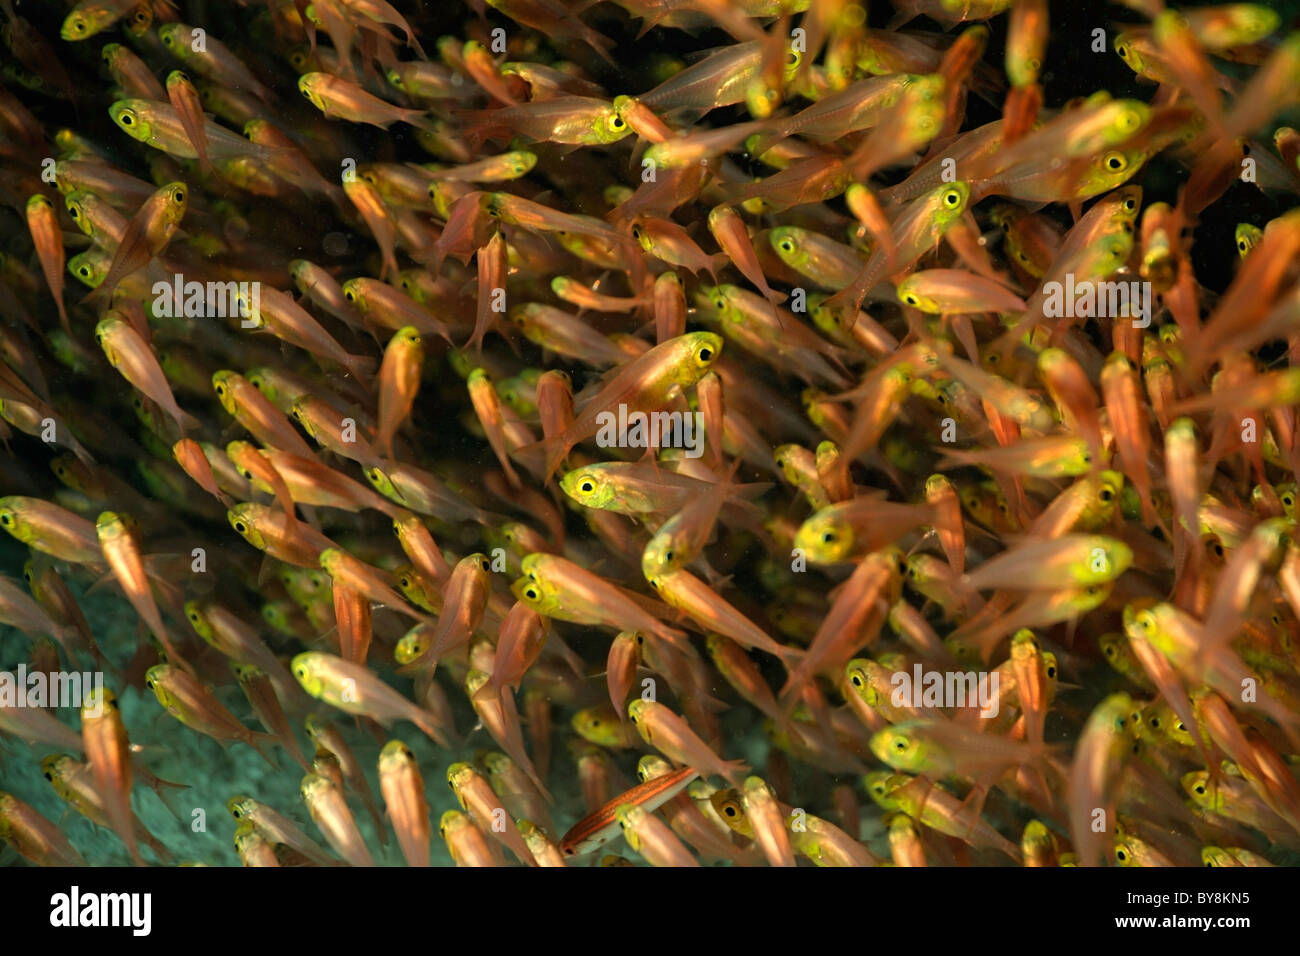 School of yellow sweeper (parapriacanthus ransonneti) fish Stock Photo